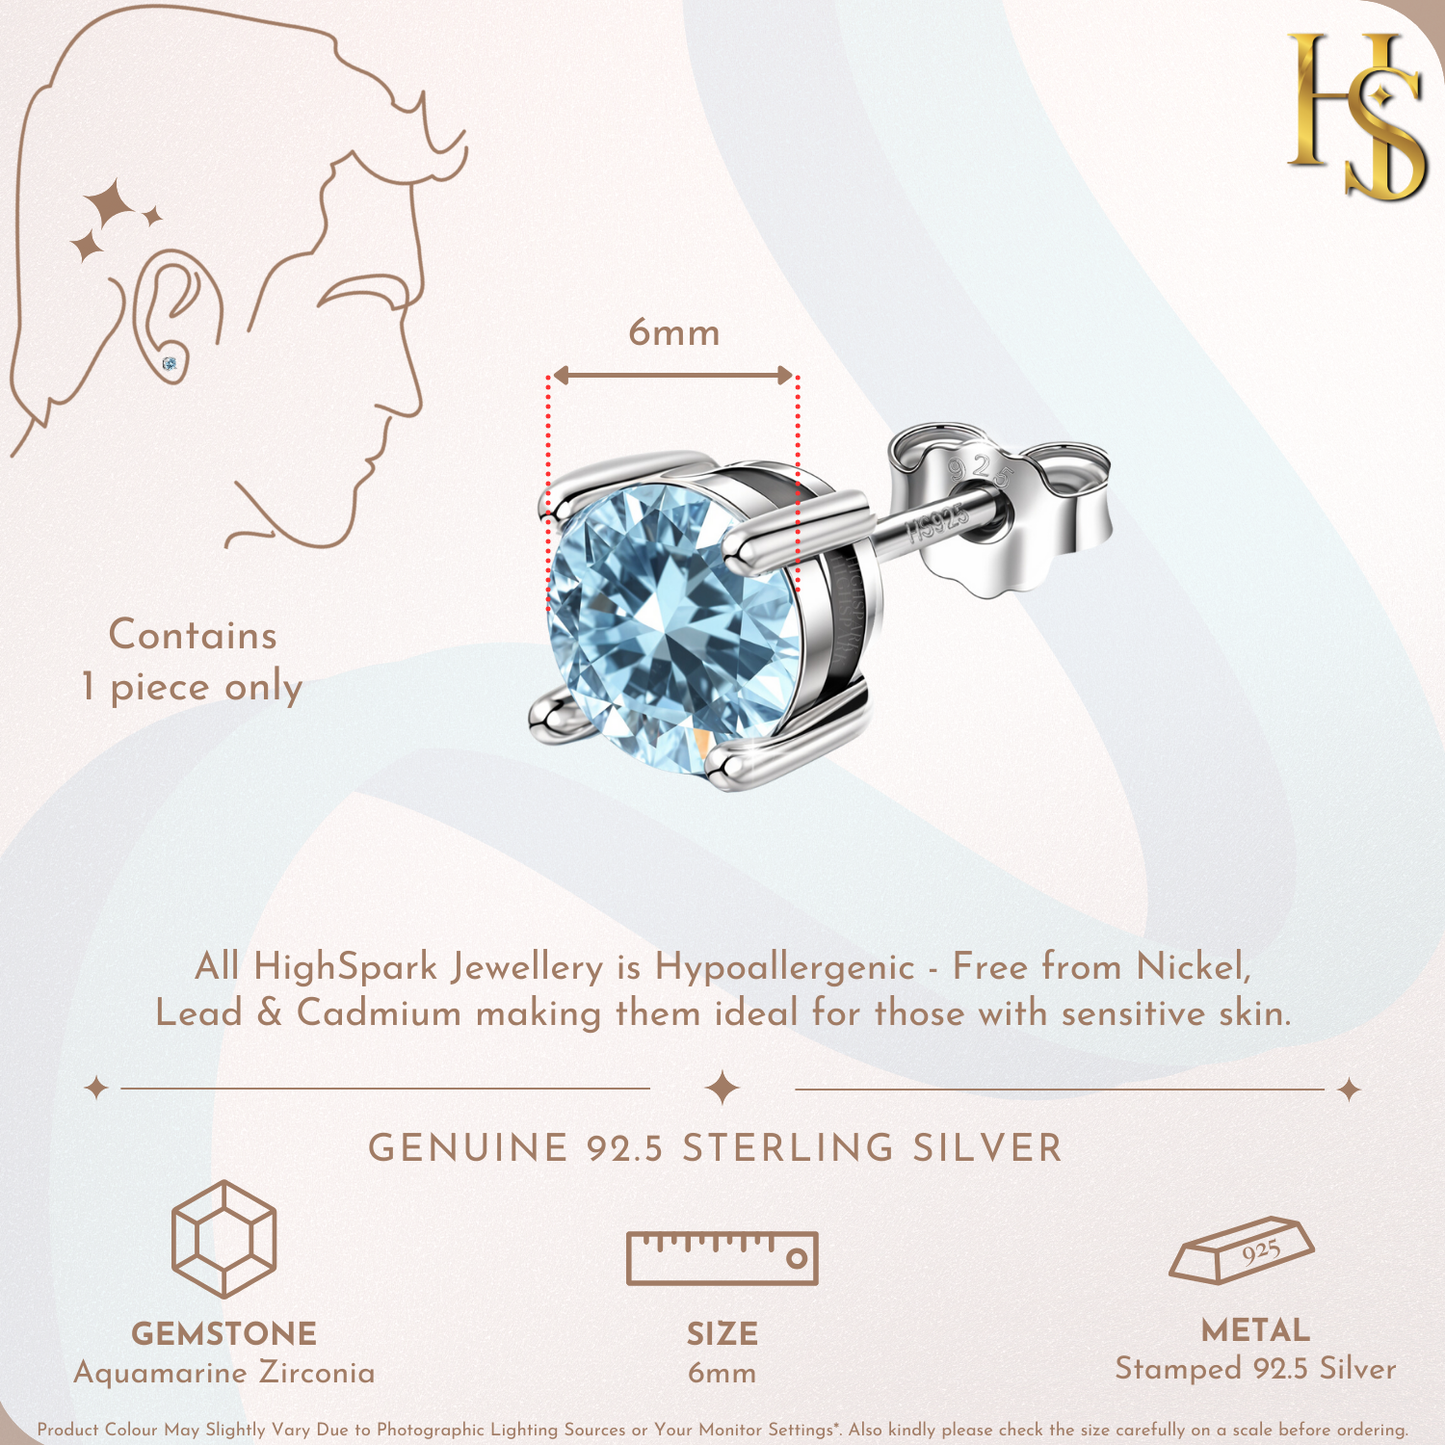 Men's Solitaire Stud Earring - 925 Silver - Birthstone March Aquamarine Zirconia - 1 Piece